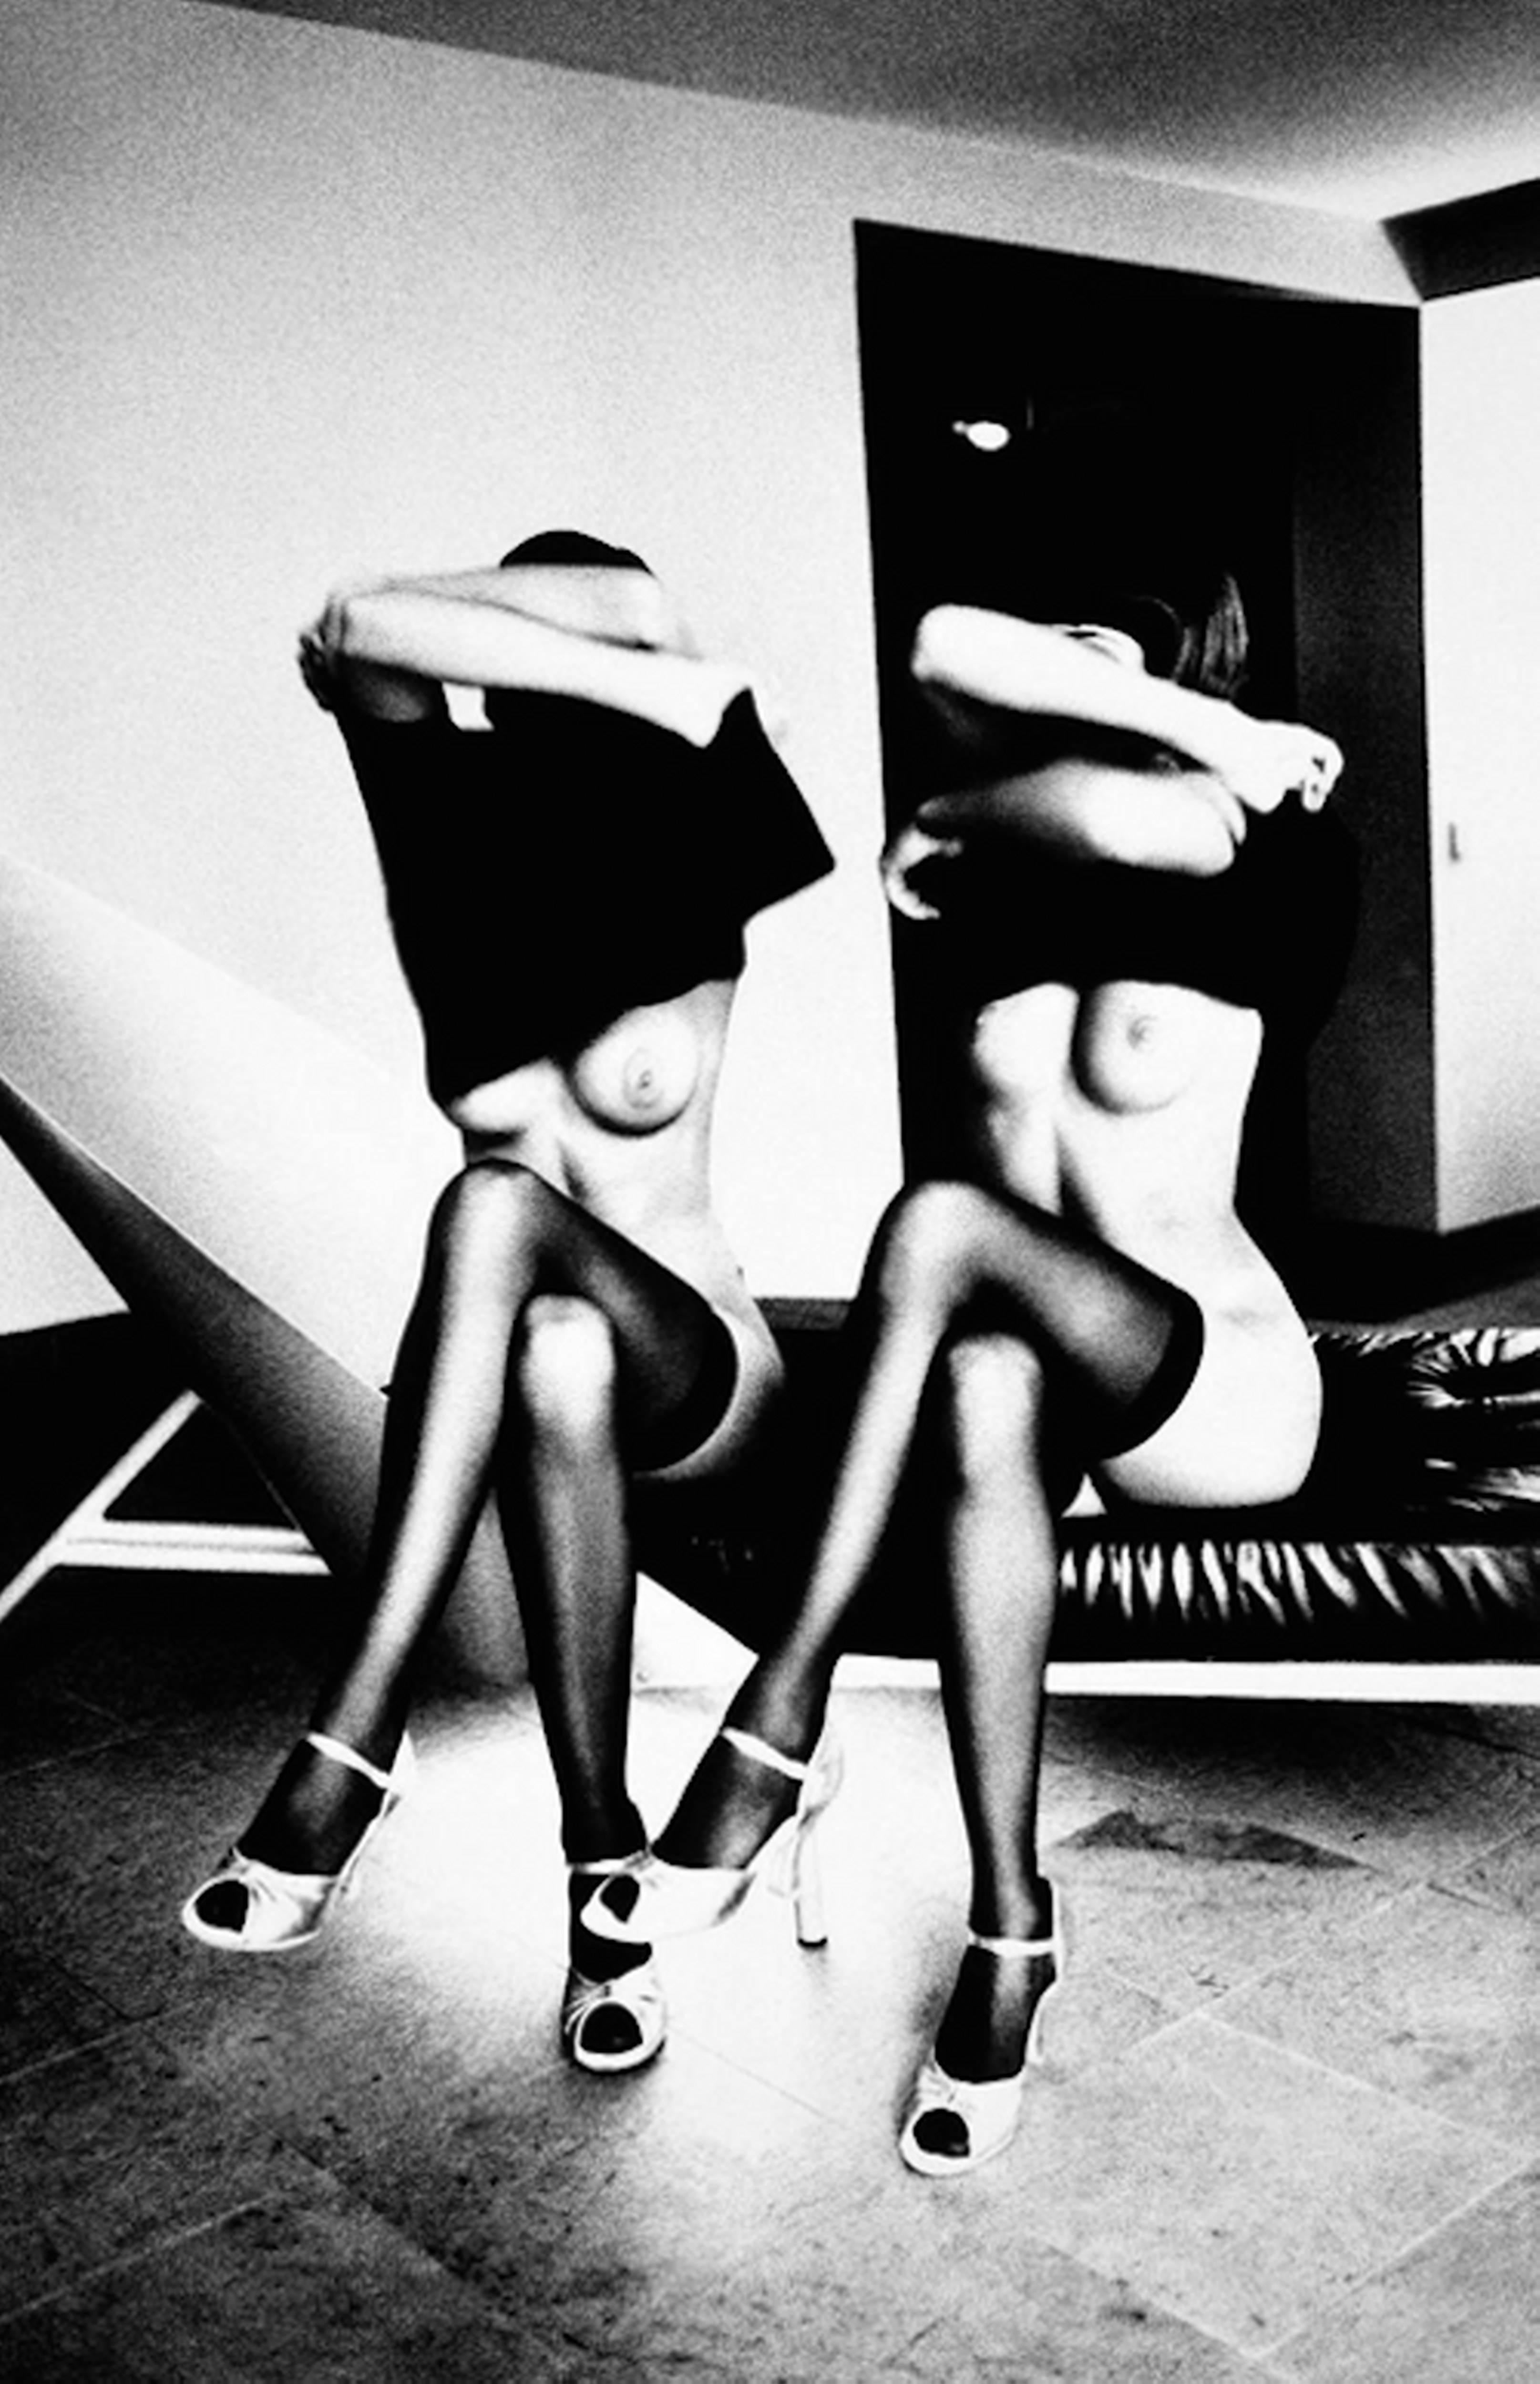 Ellen von Unwerth Black and White Photograph - Nudes at Royalton - two Models undressing, fine art photography, 1992